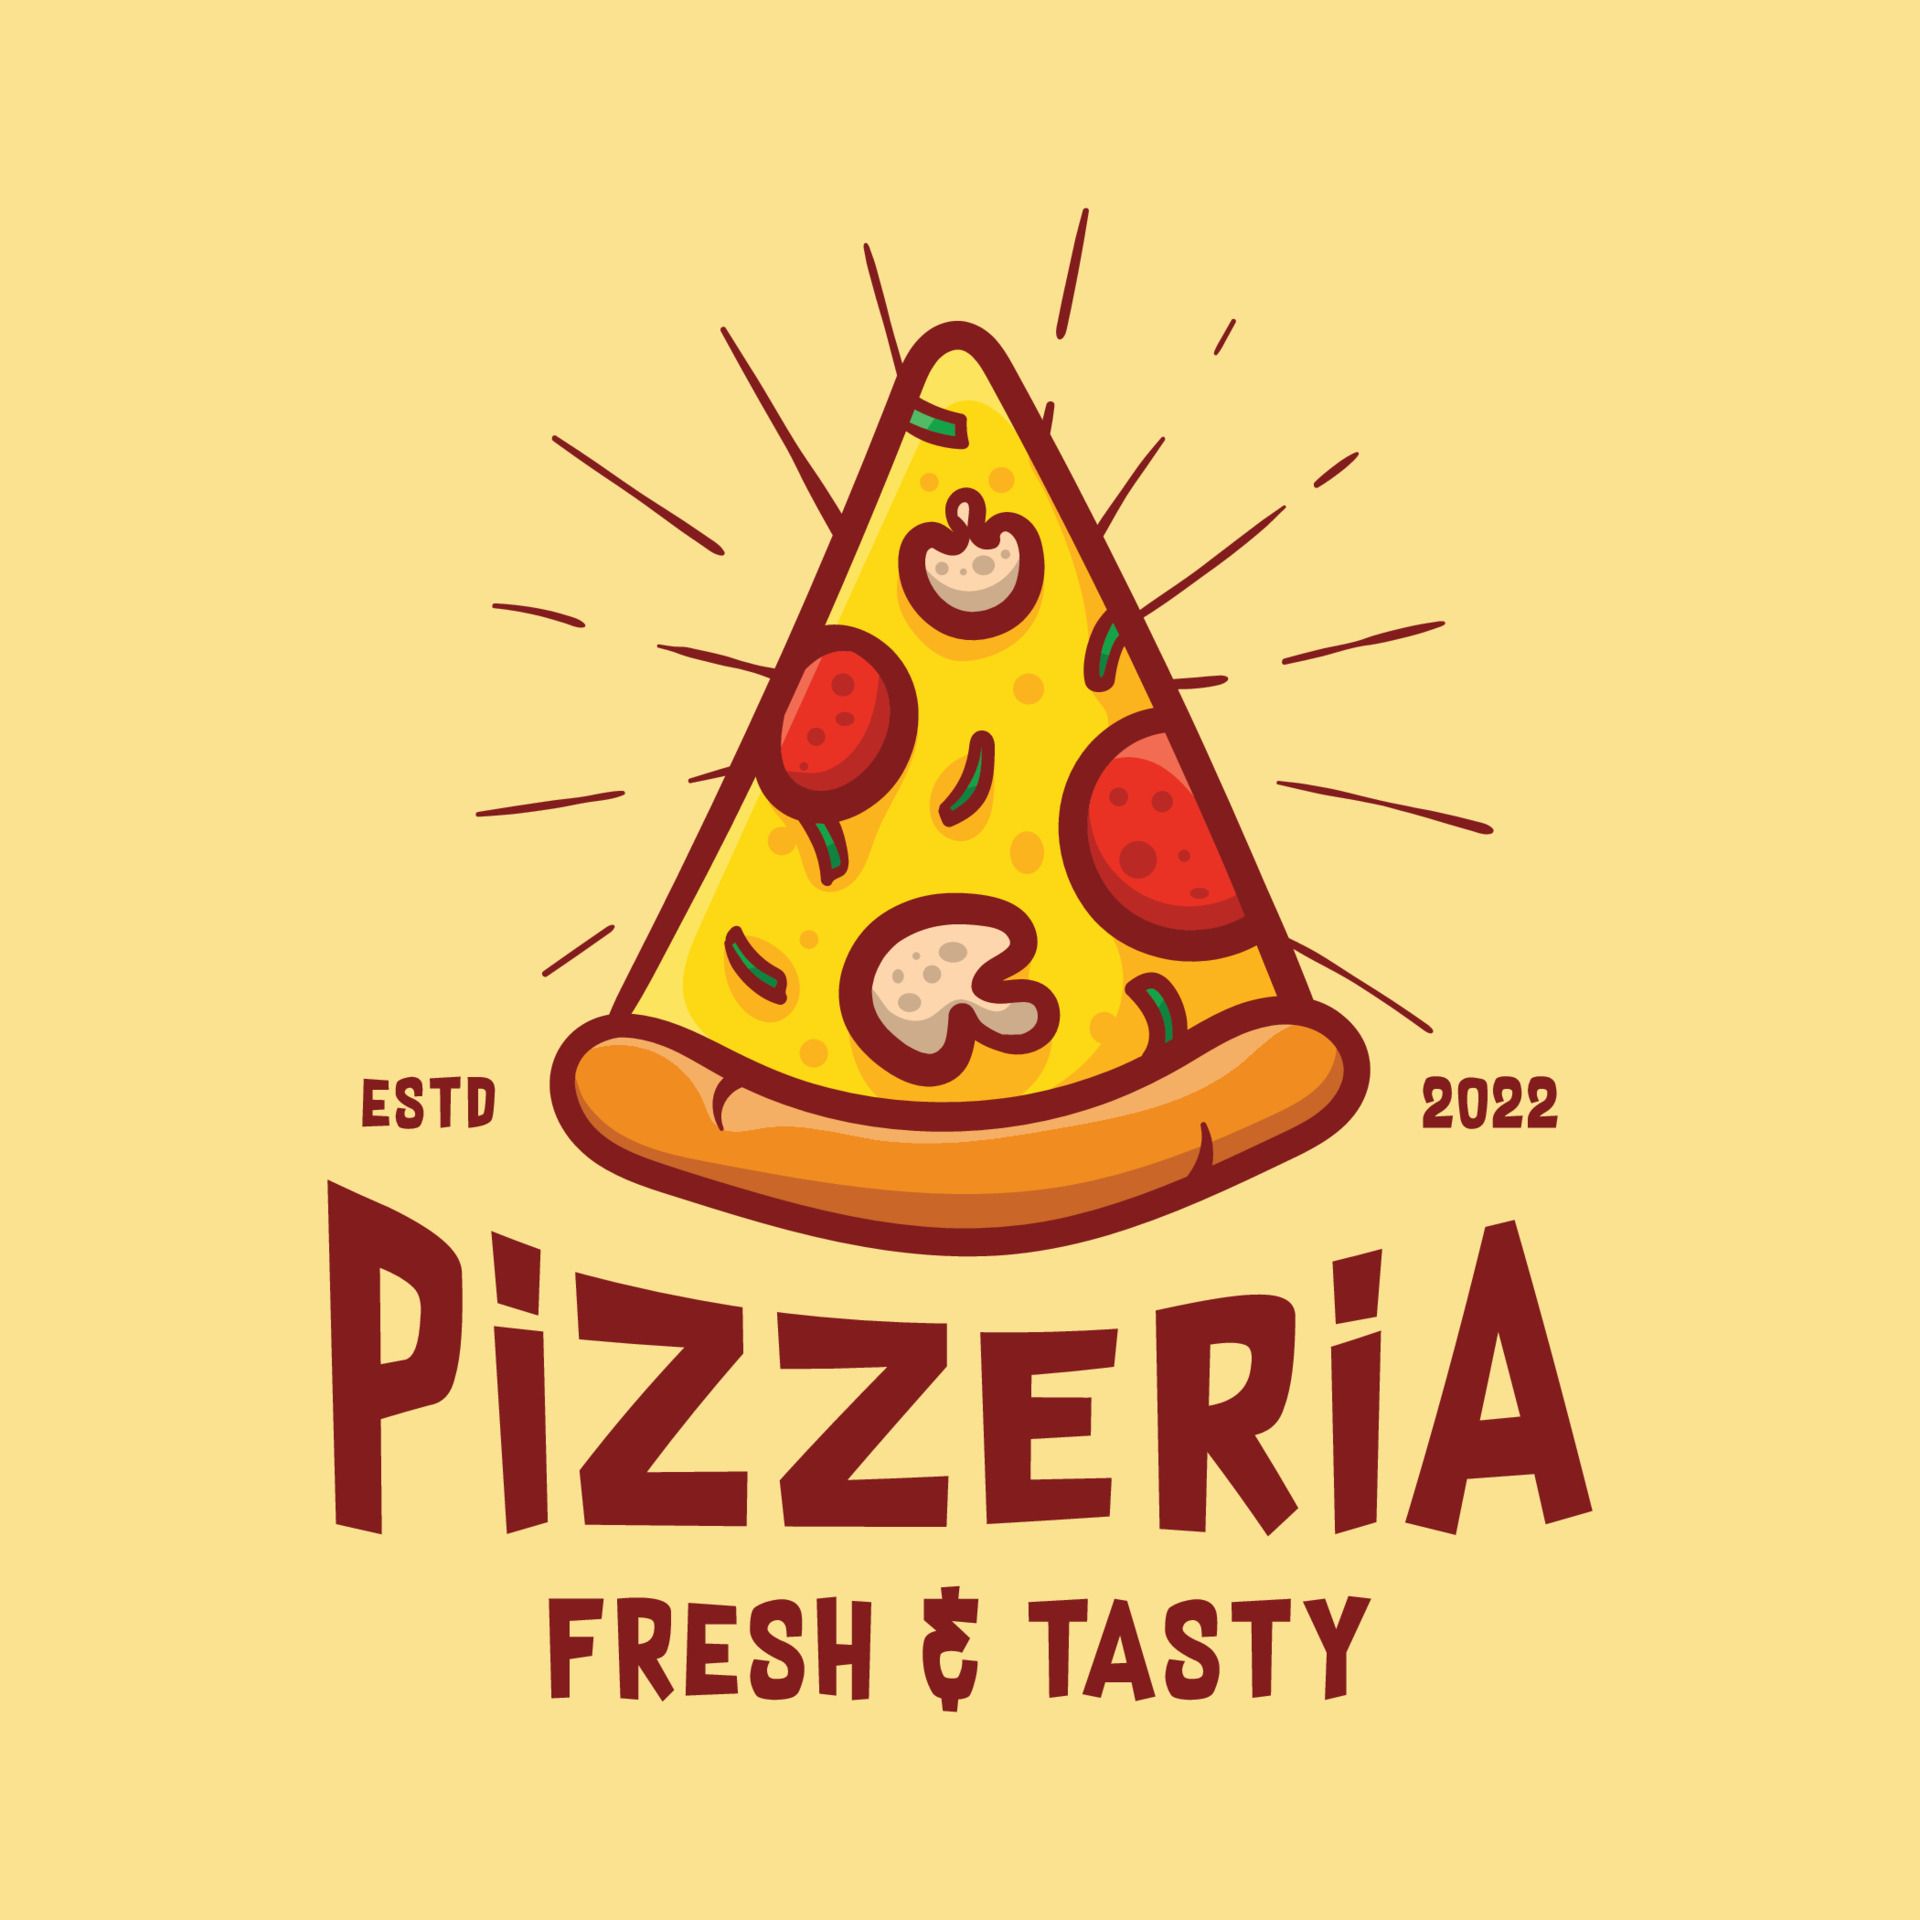 Slice Pizza Logo With Light Background, Cute And Premium Design. Suitable For Restaurant Logos, Prints, T Shirt Designs, Wallpaper, Cafes, Etc